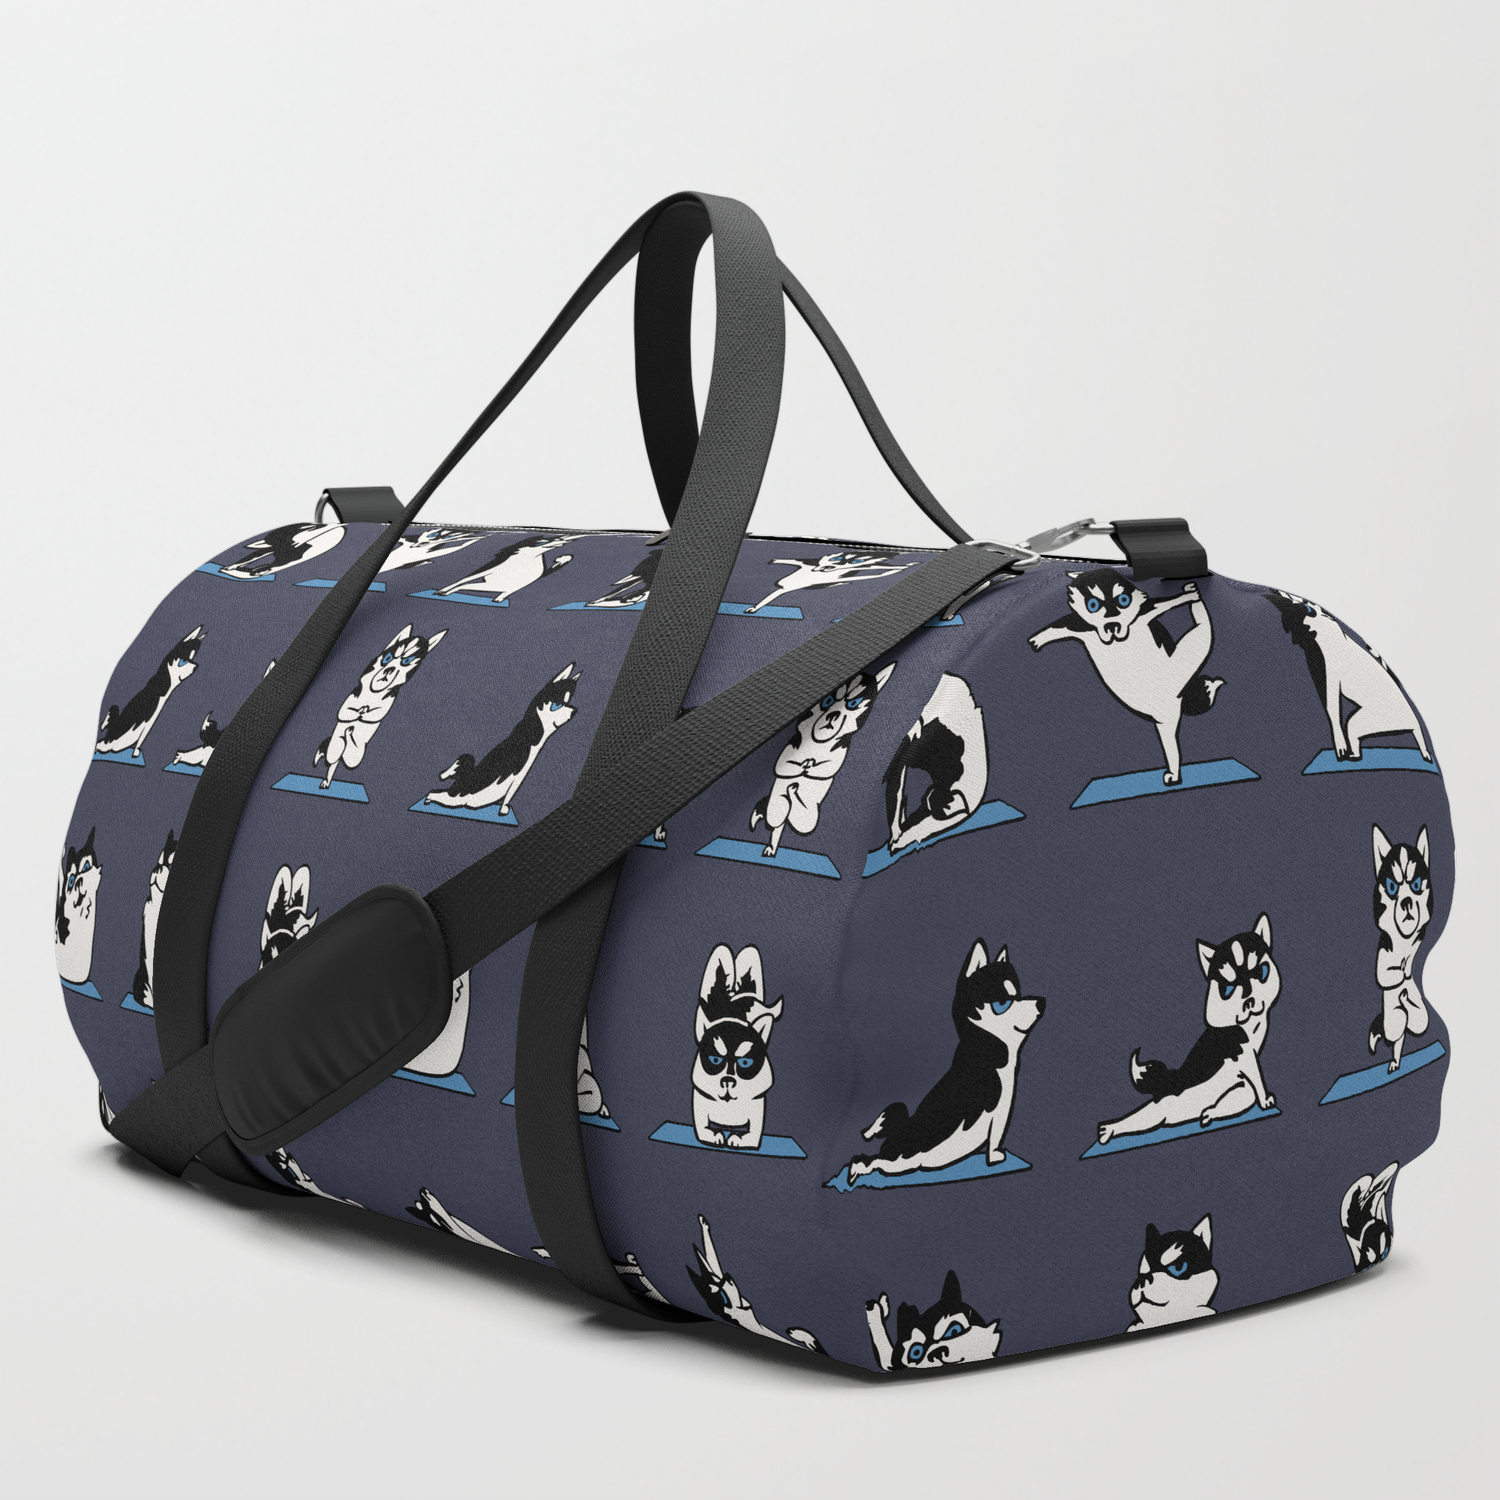 Husky Yoga Duffle Bag by Huebucket 